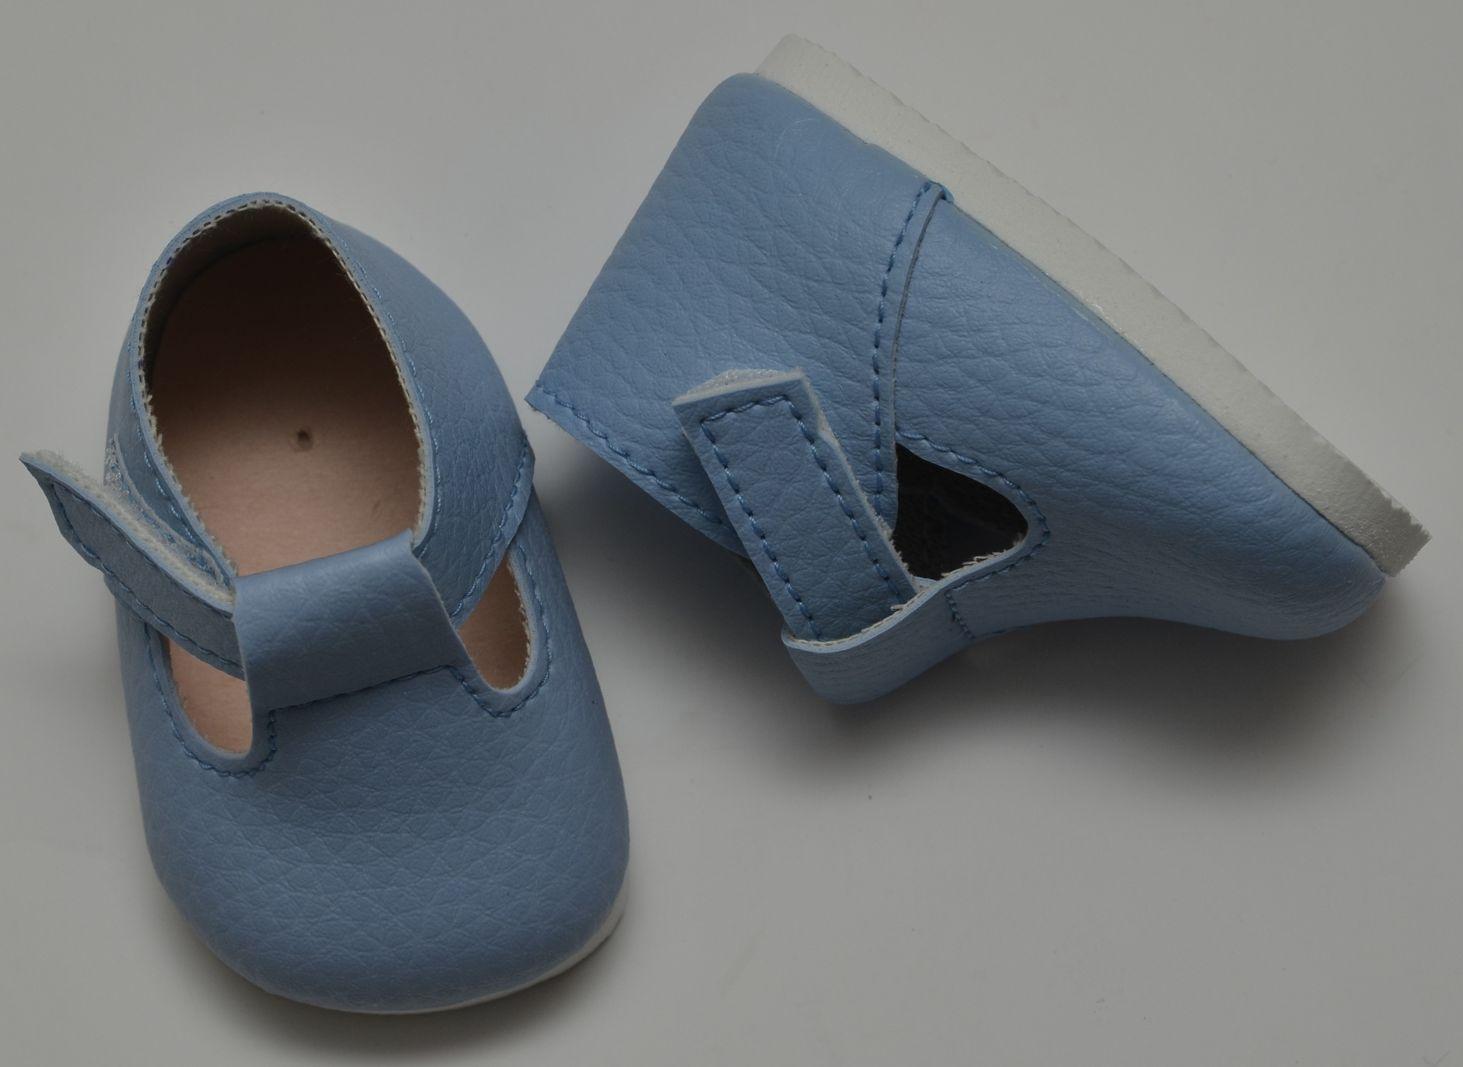  botičky pro miminka 40 - 42 cm od firmy Antonio Juan